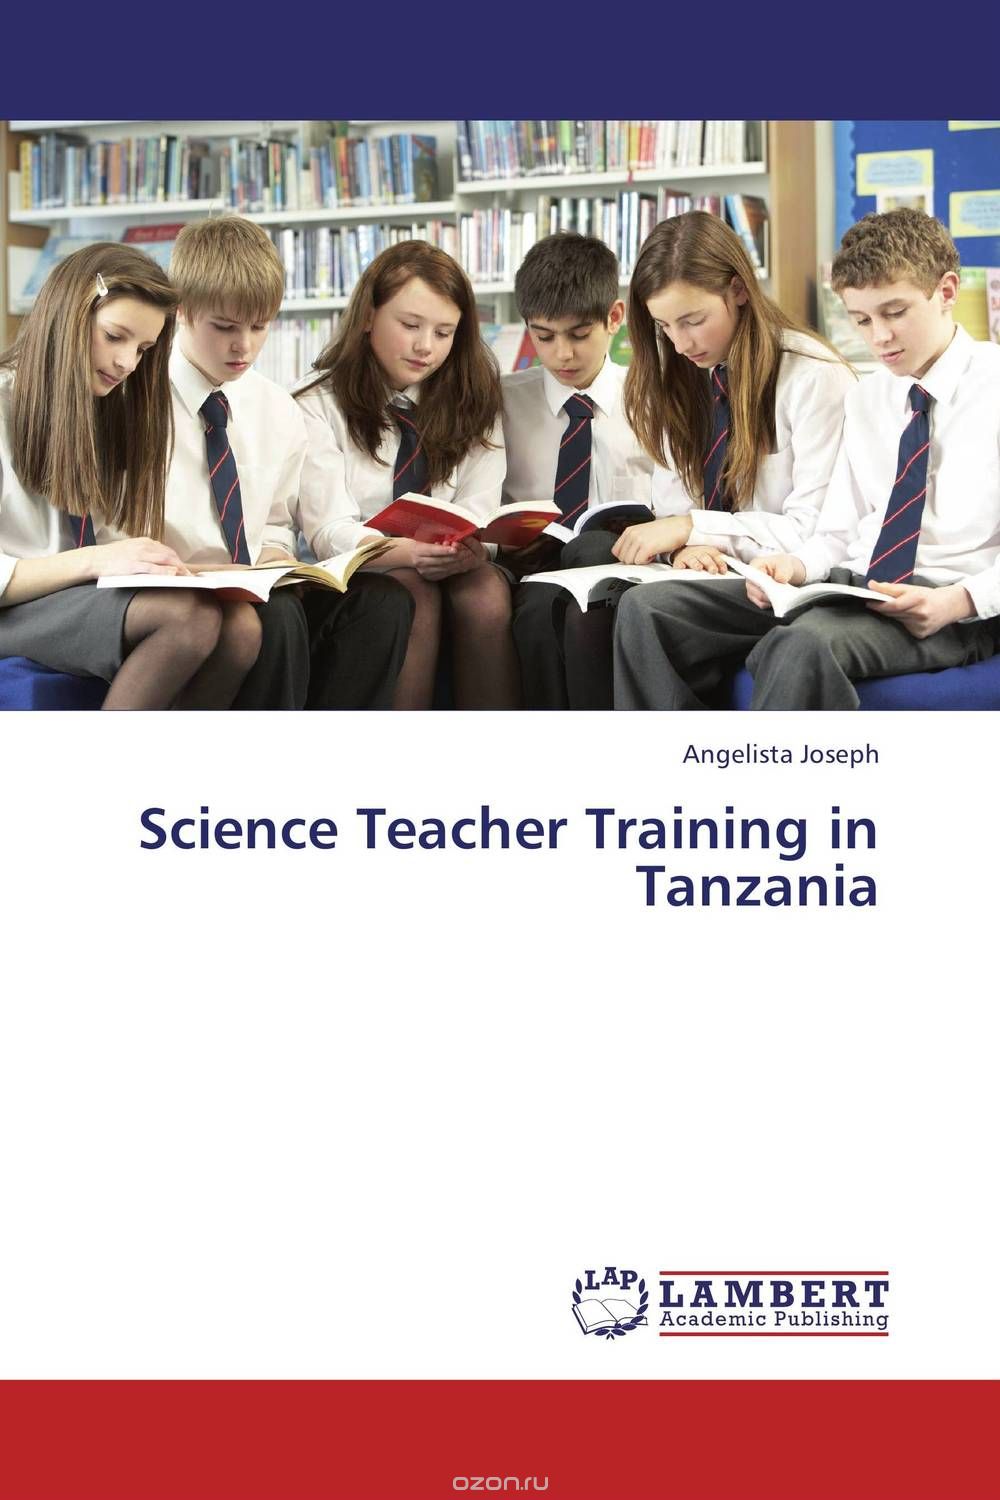 Скачать книгу "Science Teacher Training in Tanzania"